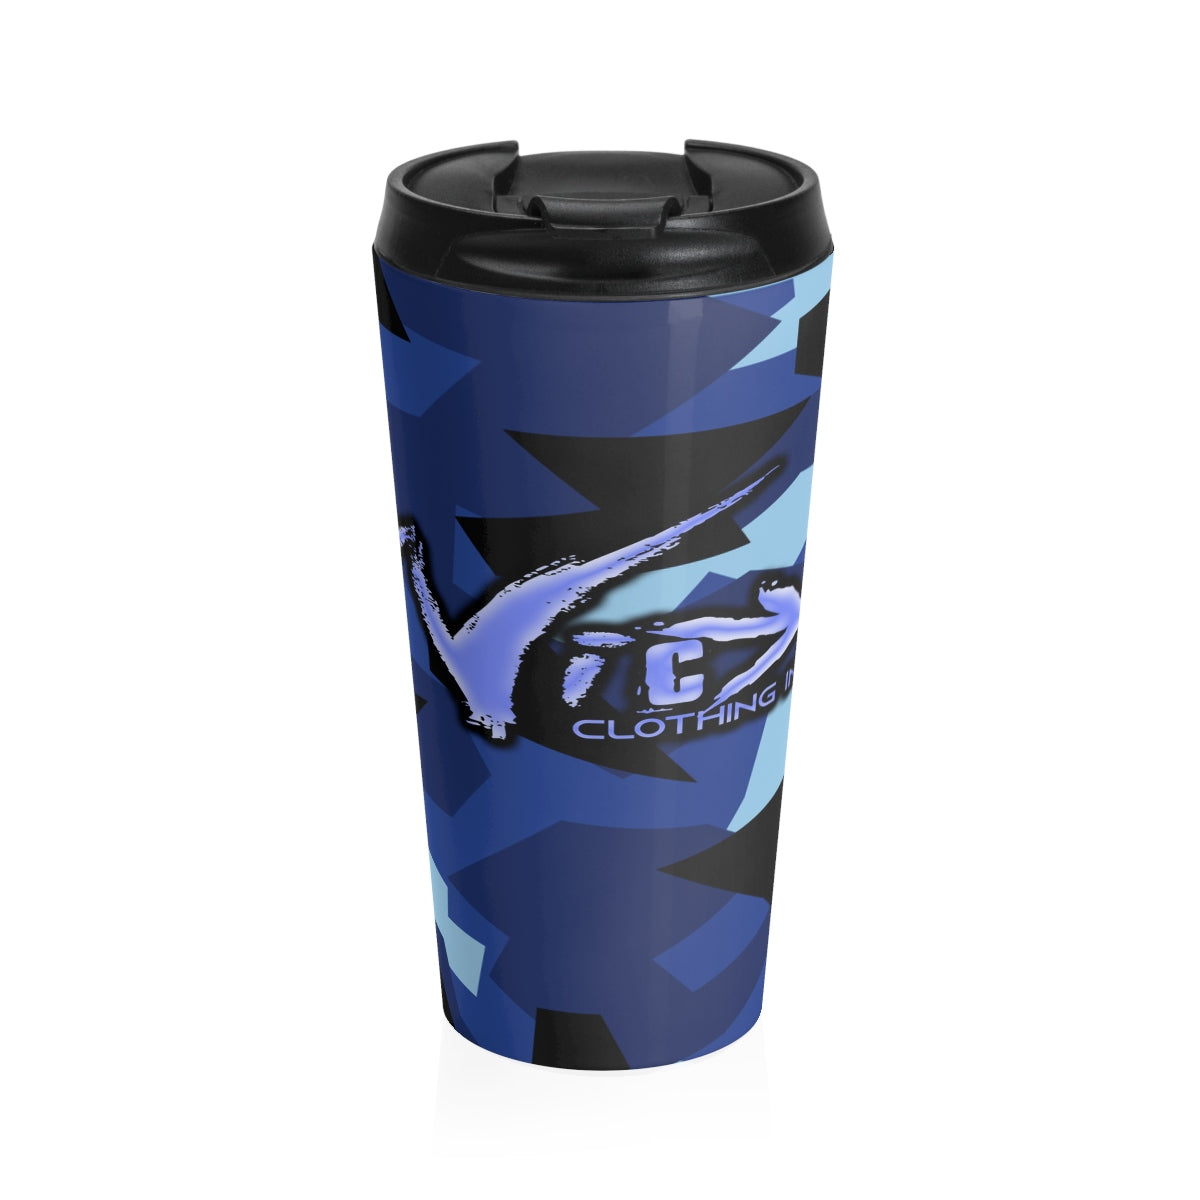 ICE 2 /Stainless Steel Travel Mug